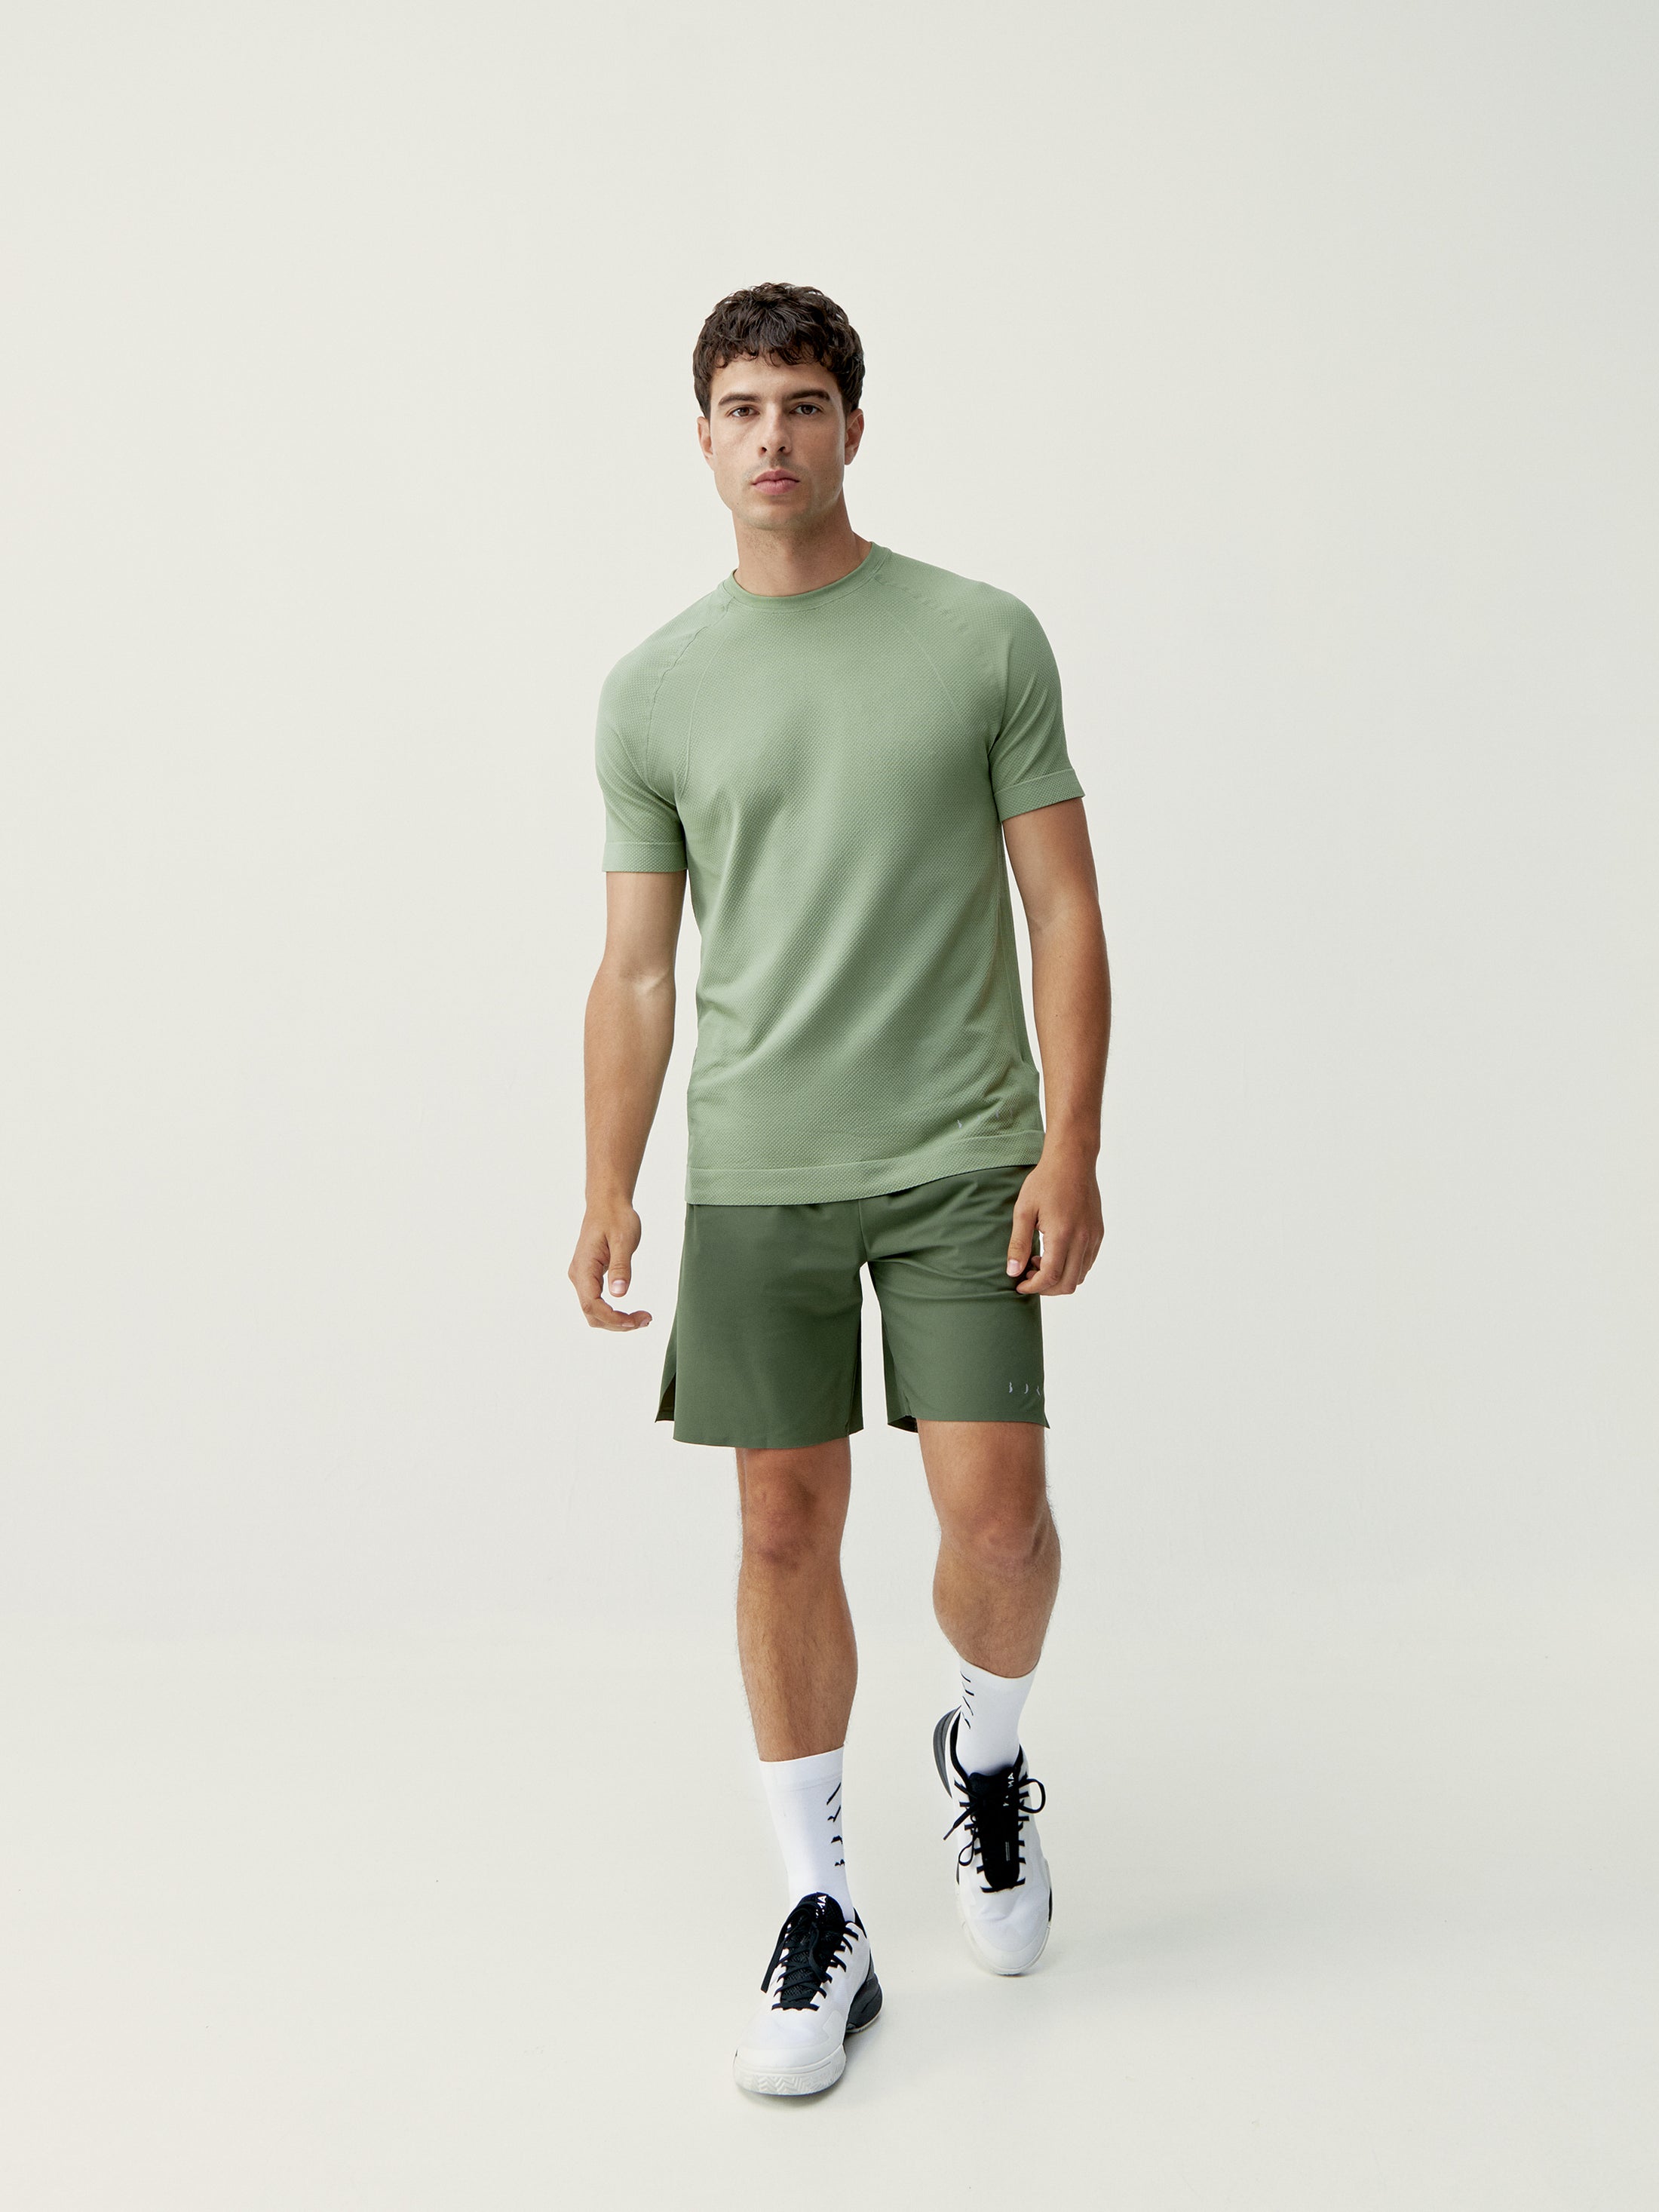 Otawa T-Shirt in Green Dry